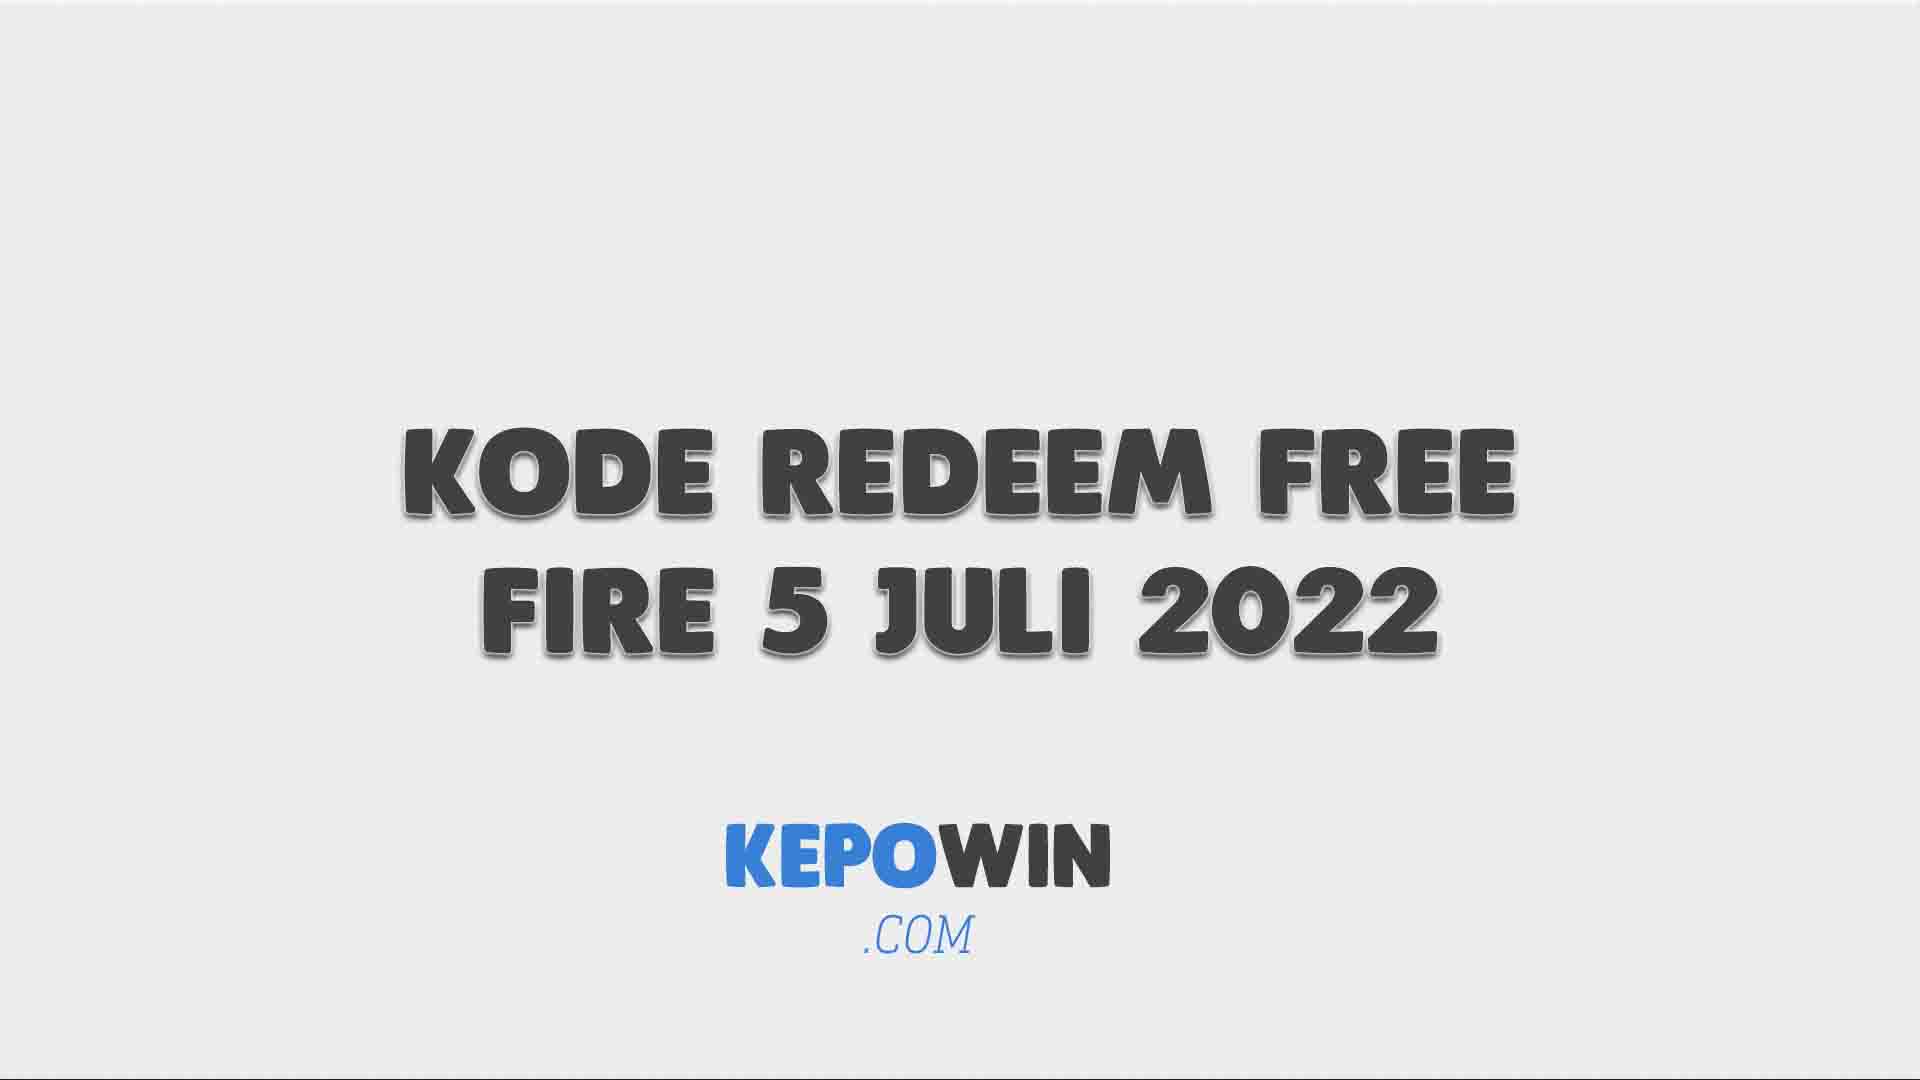 Kode Redeem Free Fire 5 Juli 2022